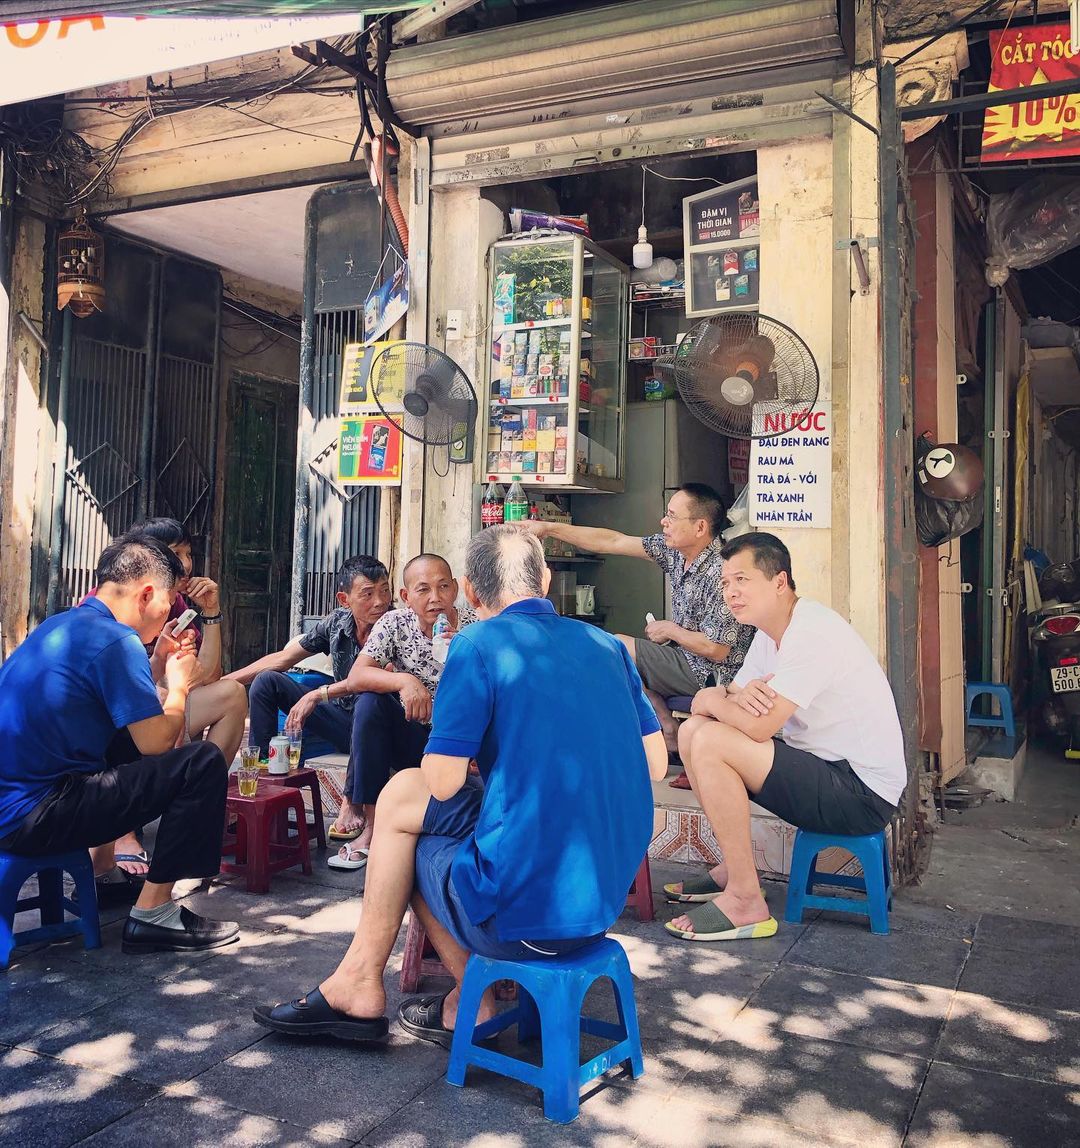 culture shock vietnam - streetside drink